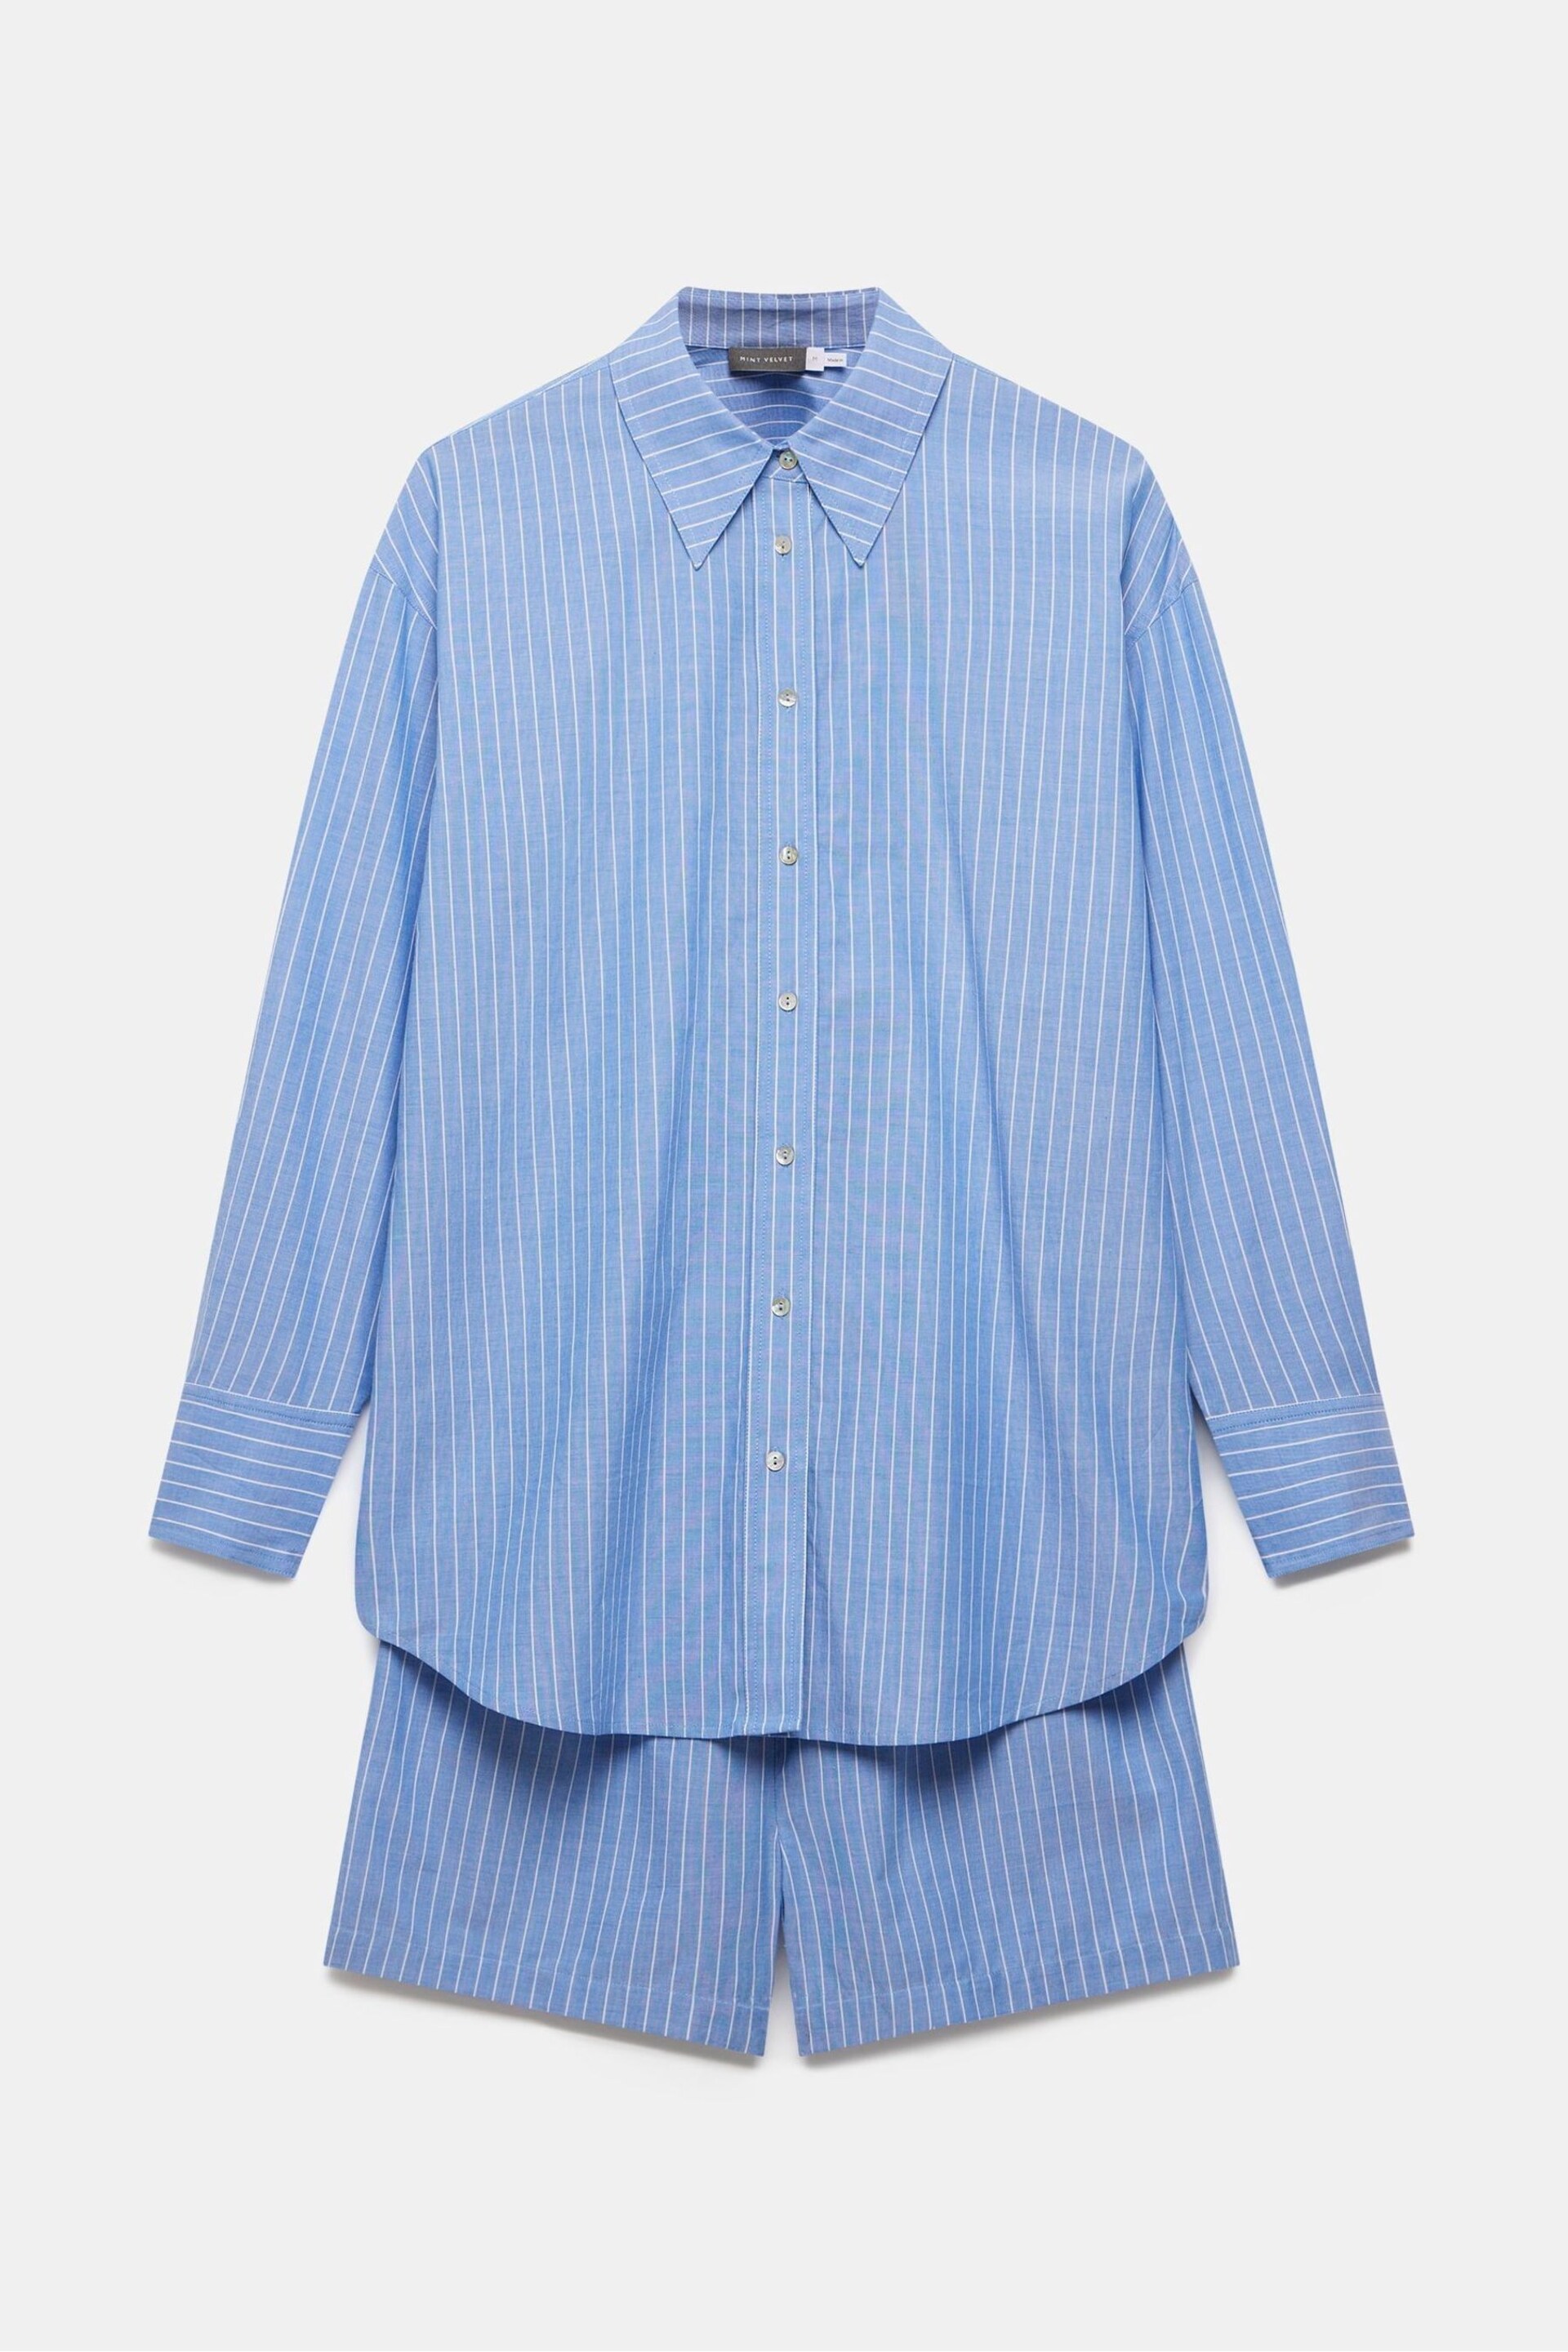 Mint Velvet Blue Cotton Shirt & Shorts Set - Image 3 of 4